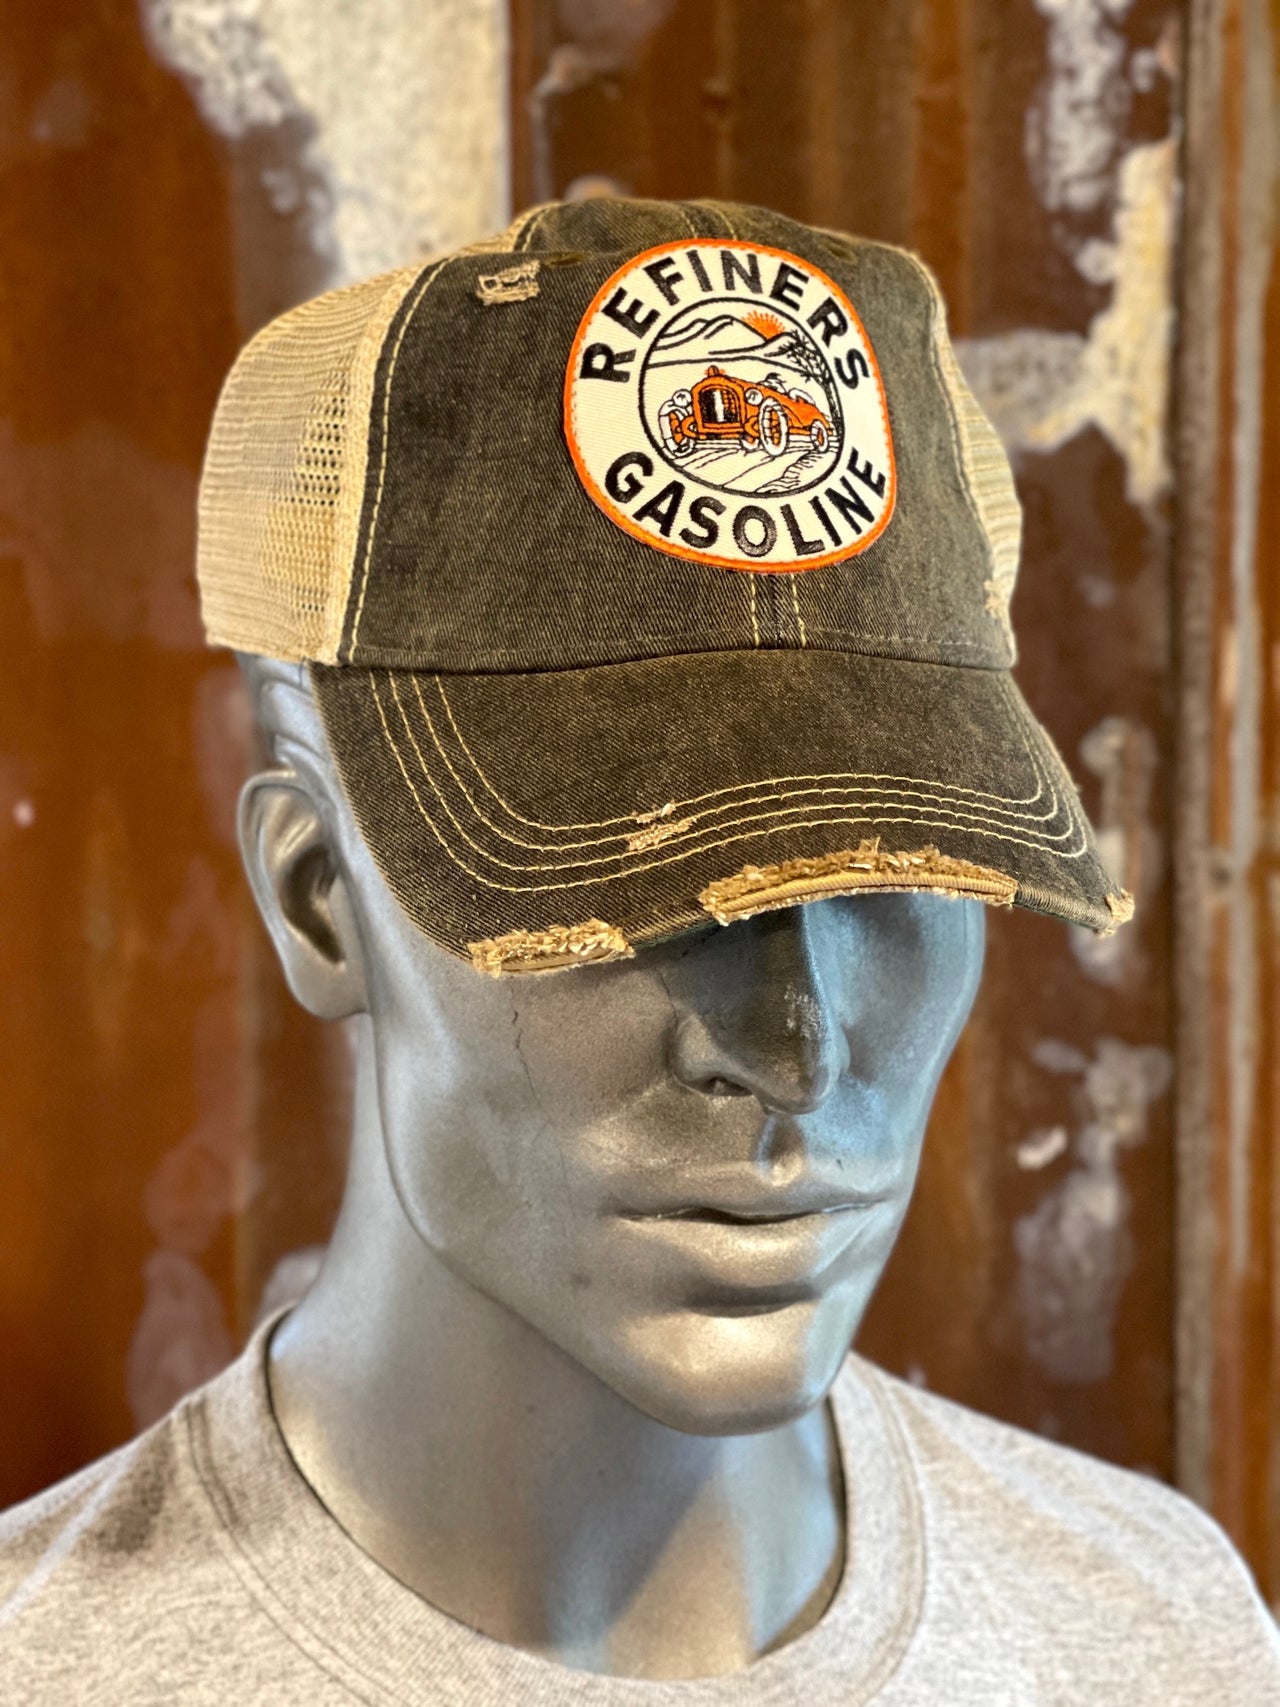 Refiners Gasoline Patch Hat- Distressed black snapback